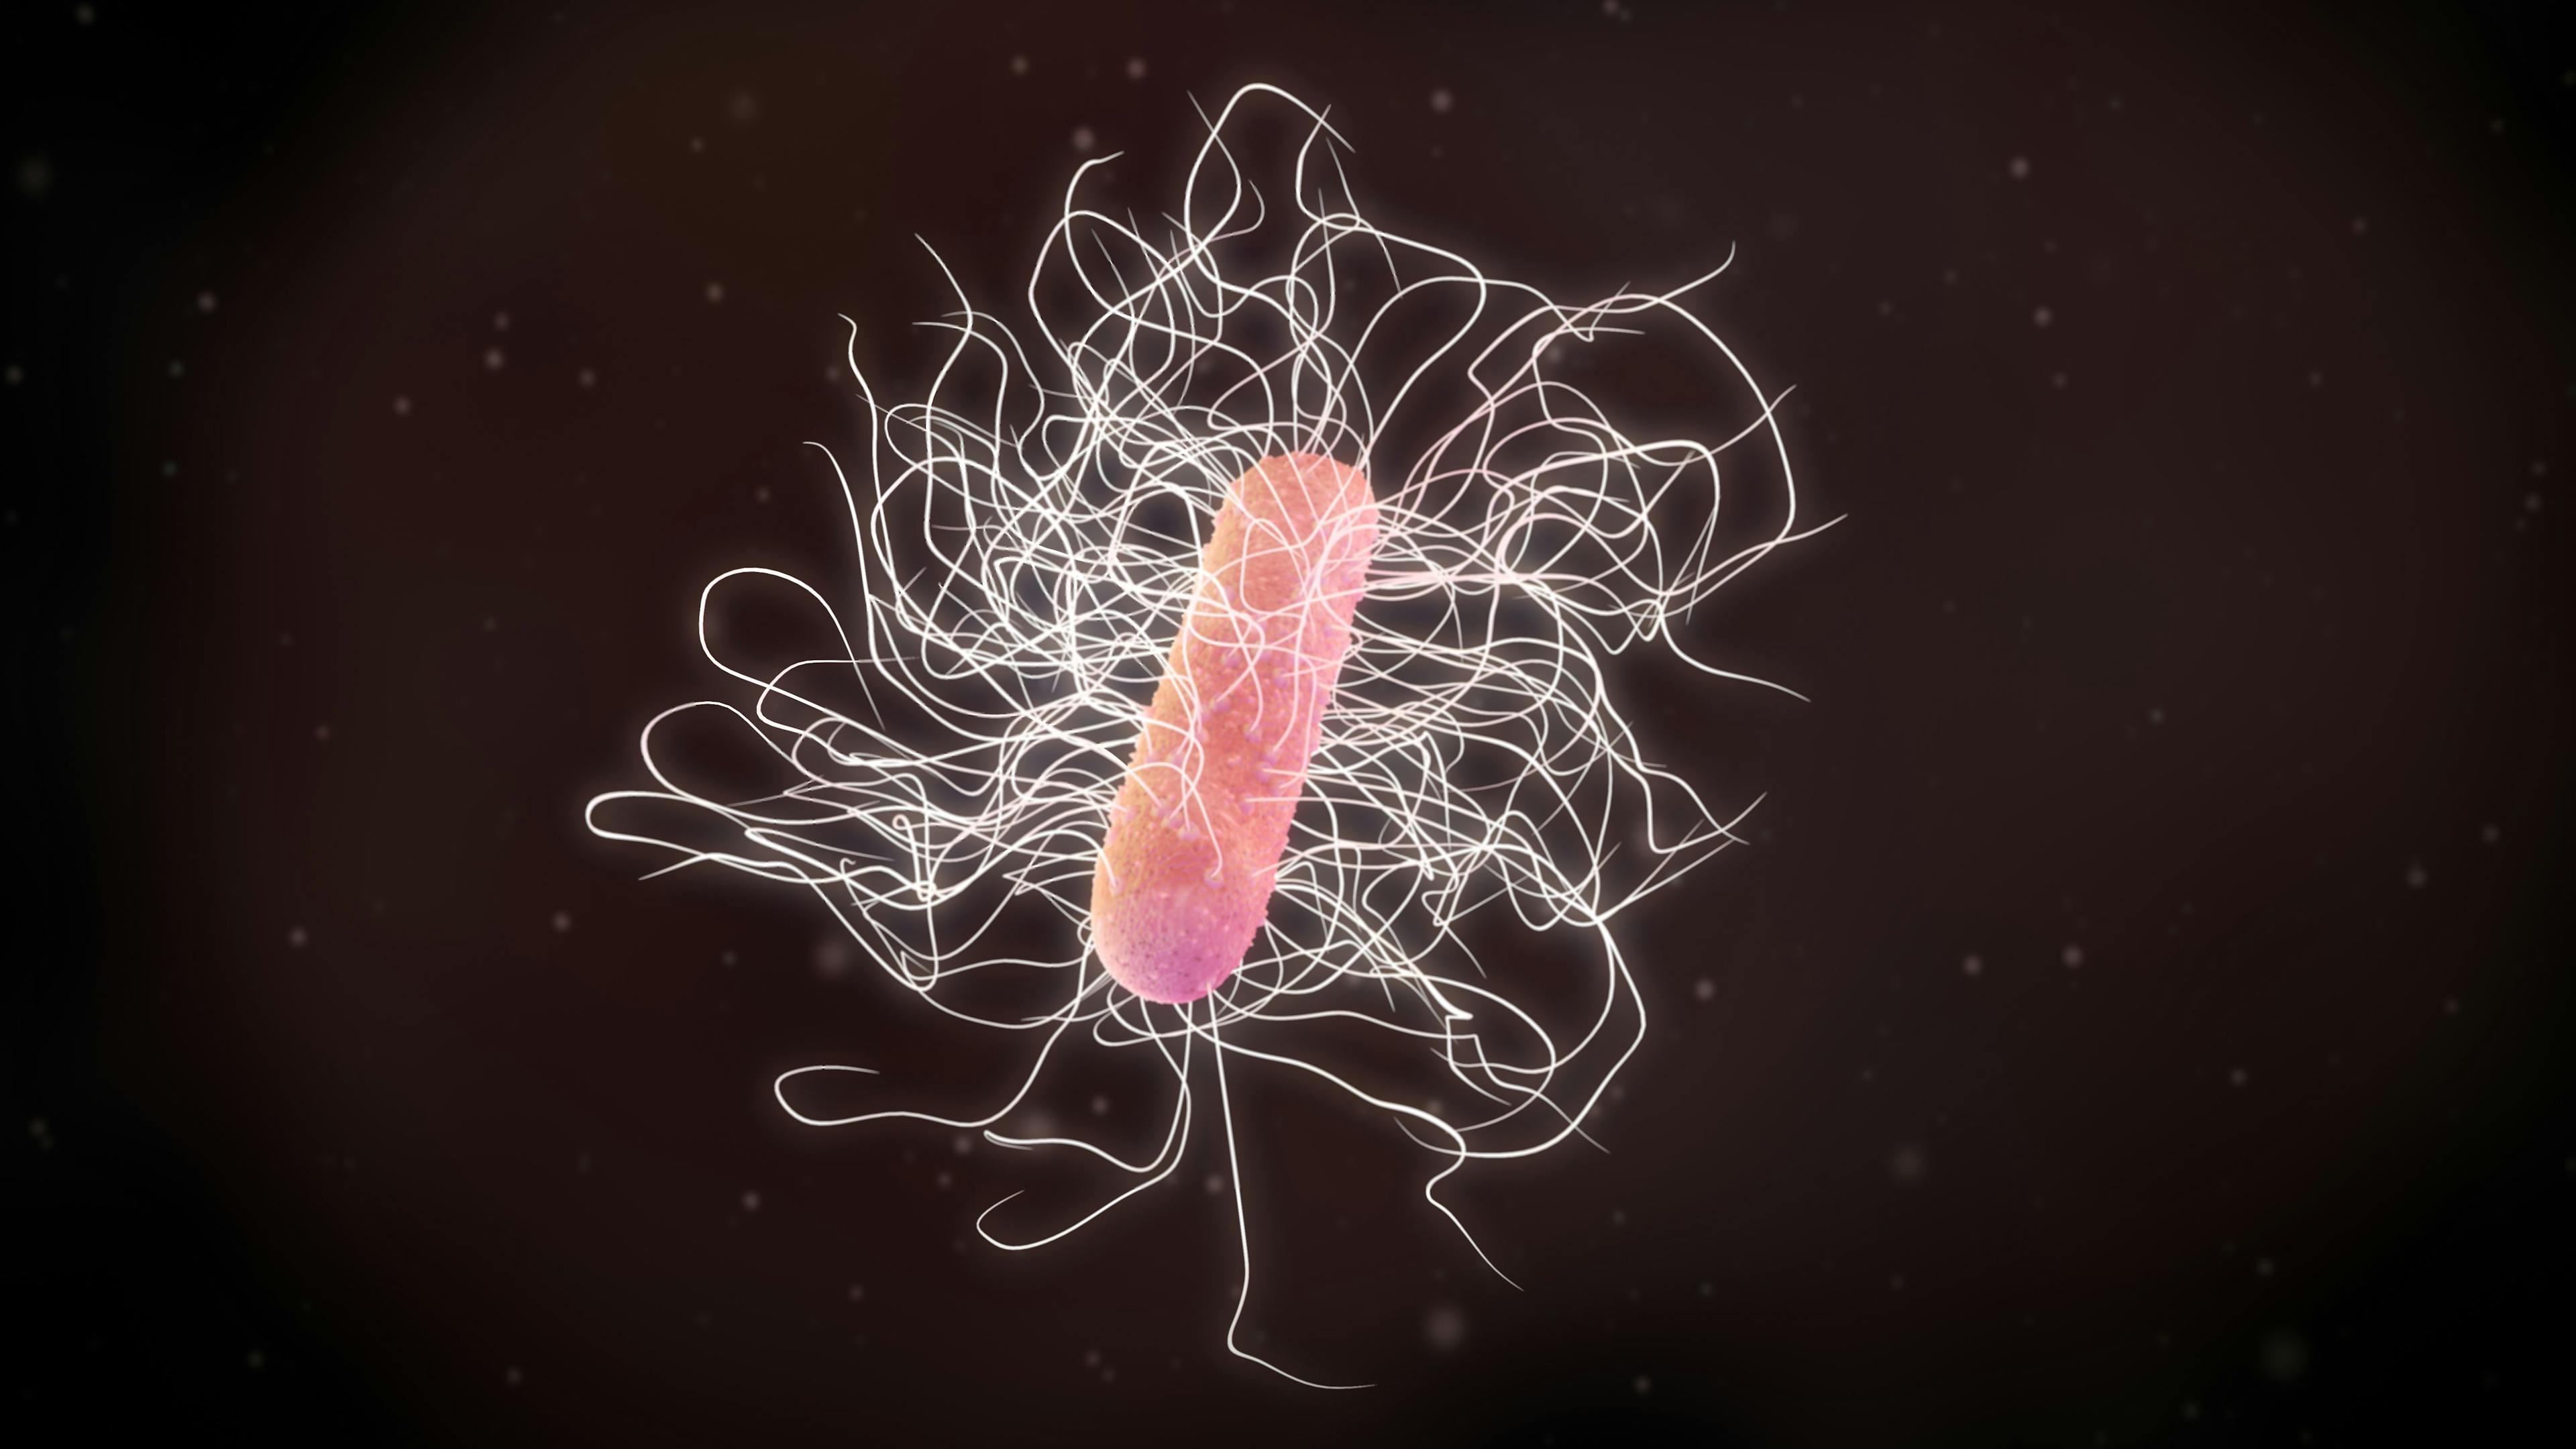 3D illustration of a clostridium difficile bacteria - Image credit: Gaetan | stock.adobe.com 